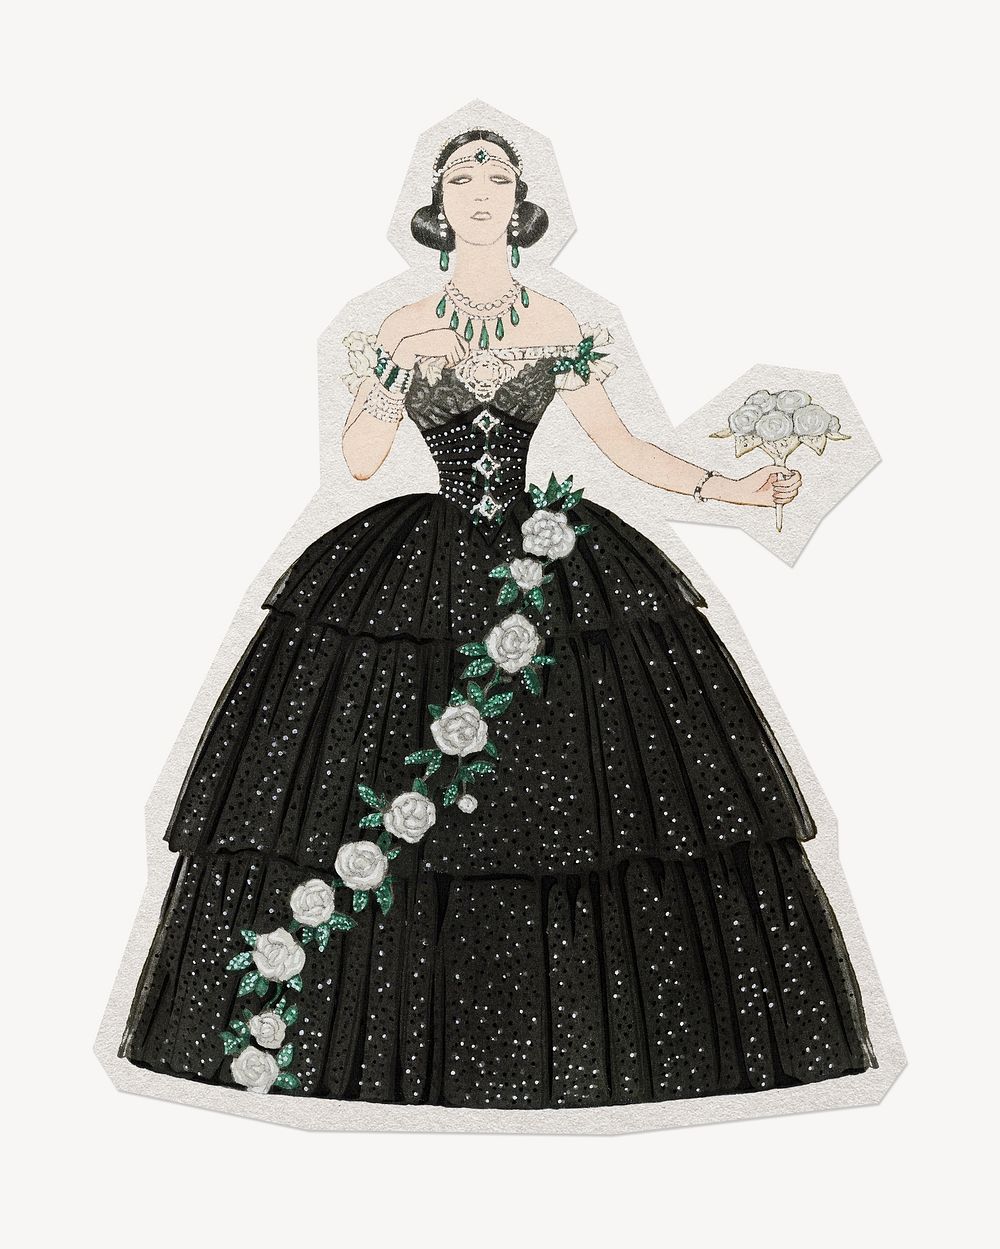 Vintage black dress woman paper element with white border 